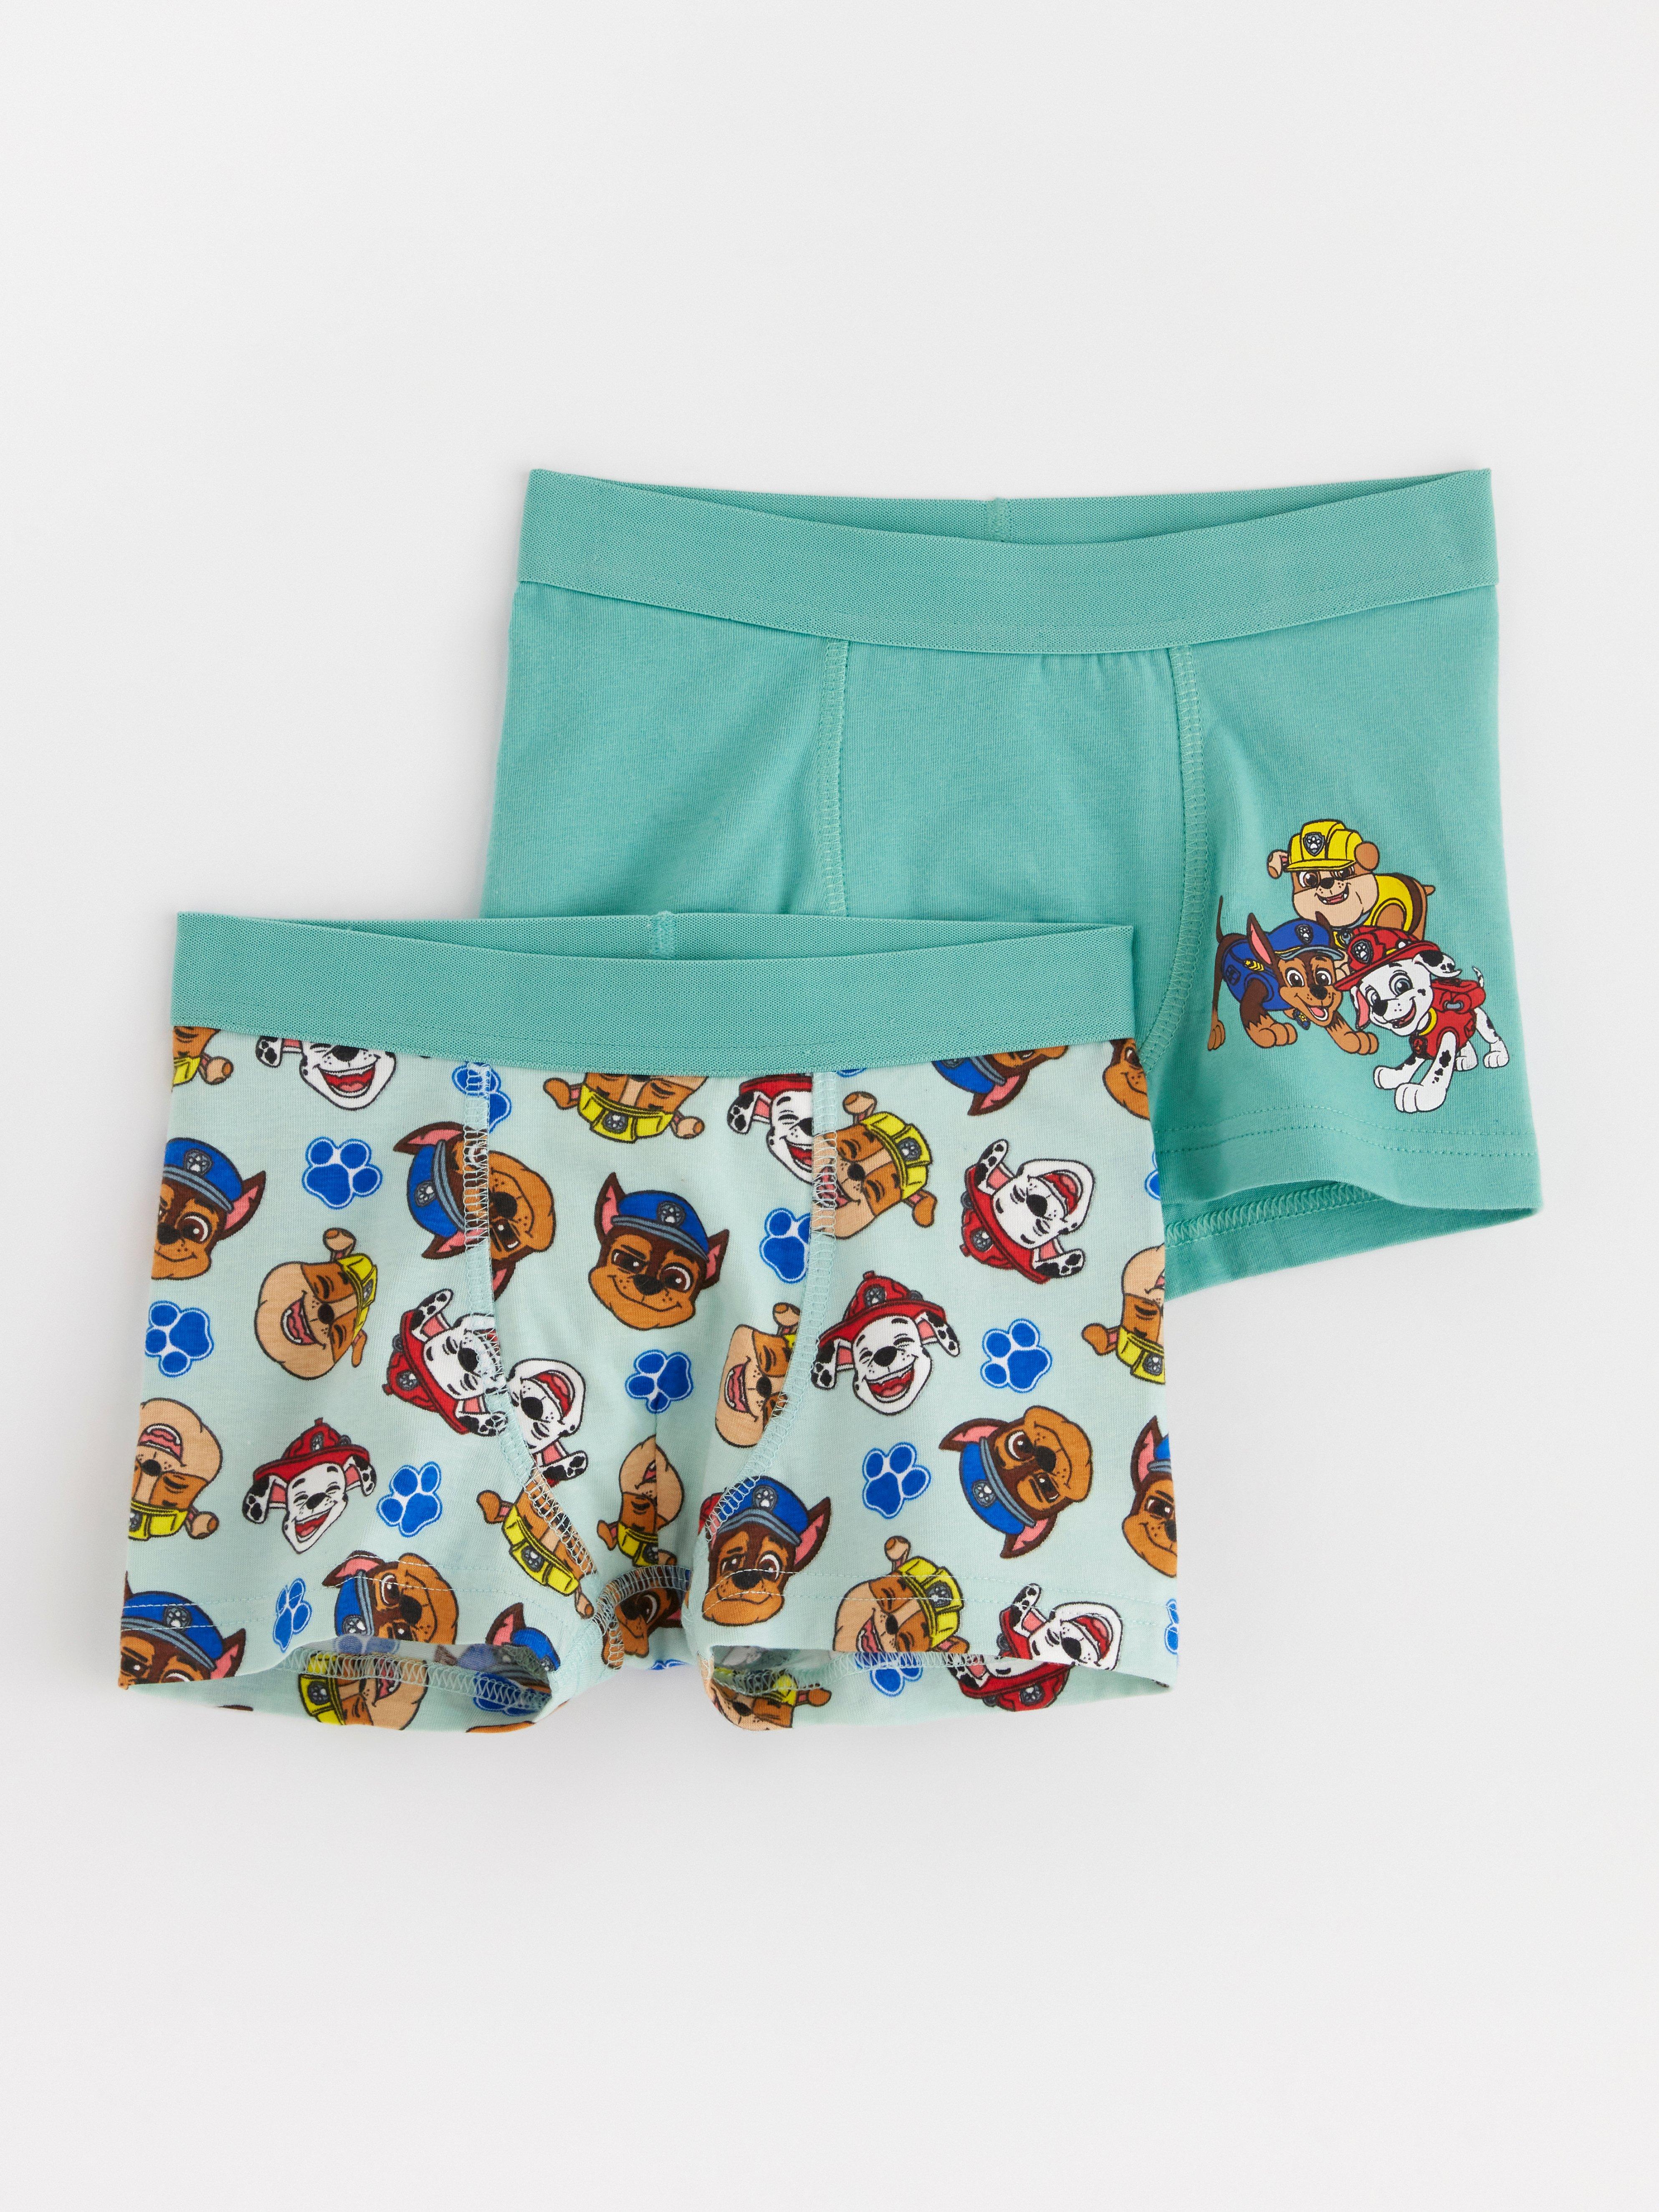 Set of boys' 2-pack panties Paw Patrol boxer shorts - Underwear